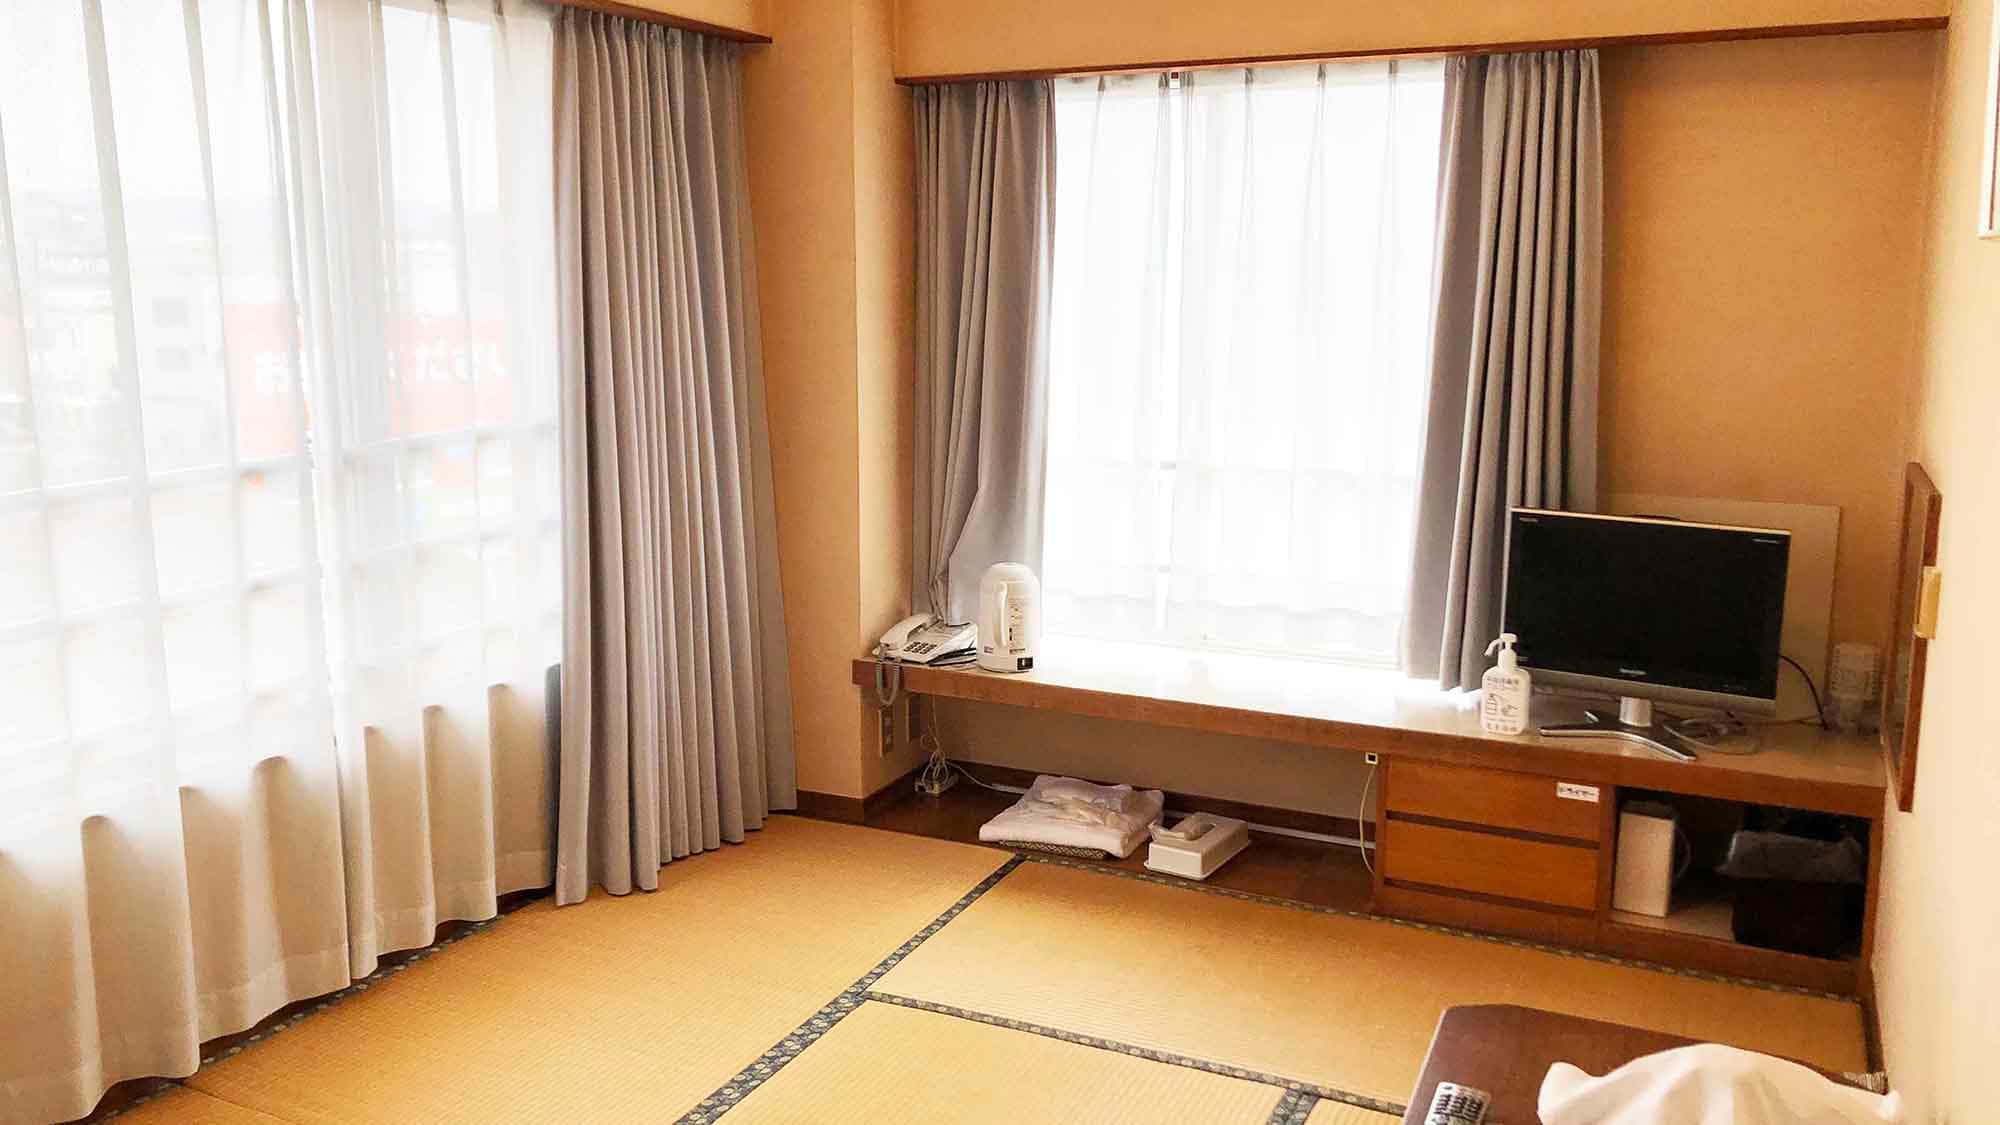 ・ Japanese-style room 6 tatami mats